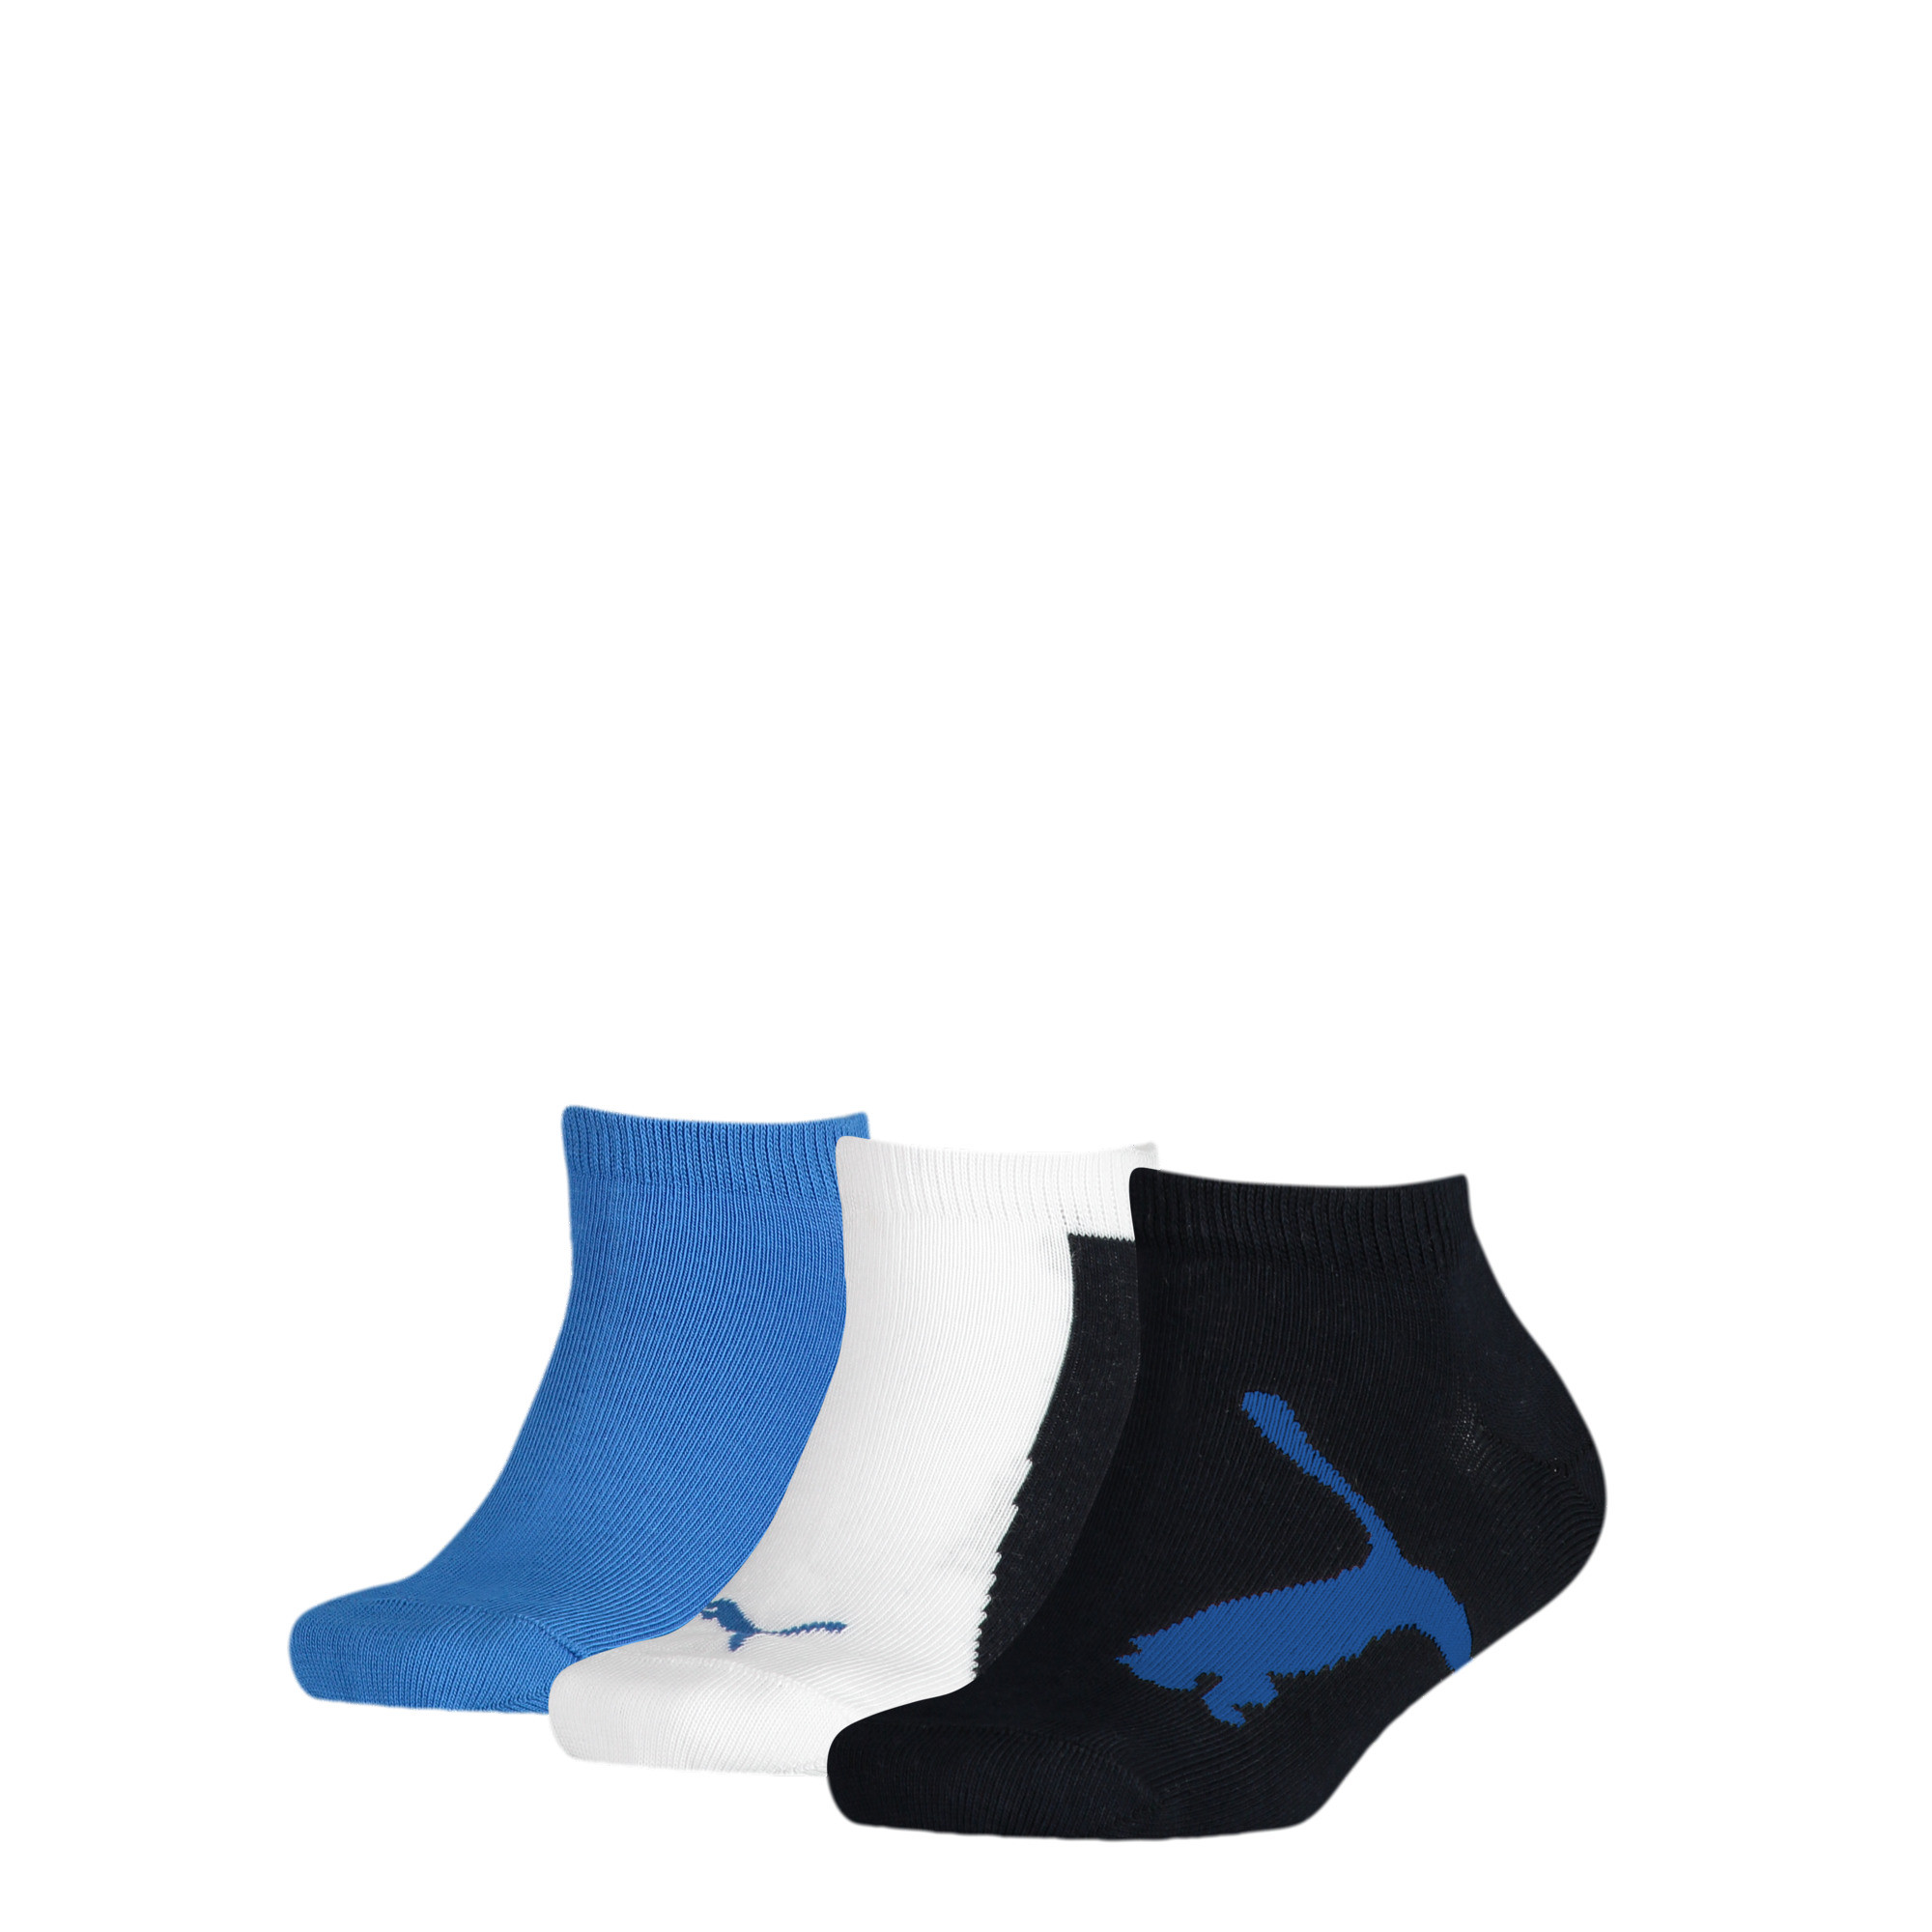 Kids' PUMA BWT Sneaker - Trainer Socks 3 Pack In Navy/White/Strong Blue, Size 23-26